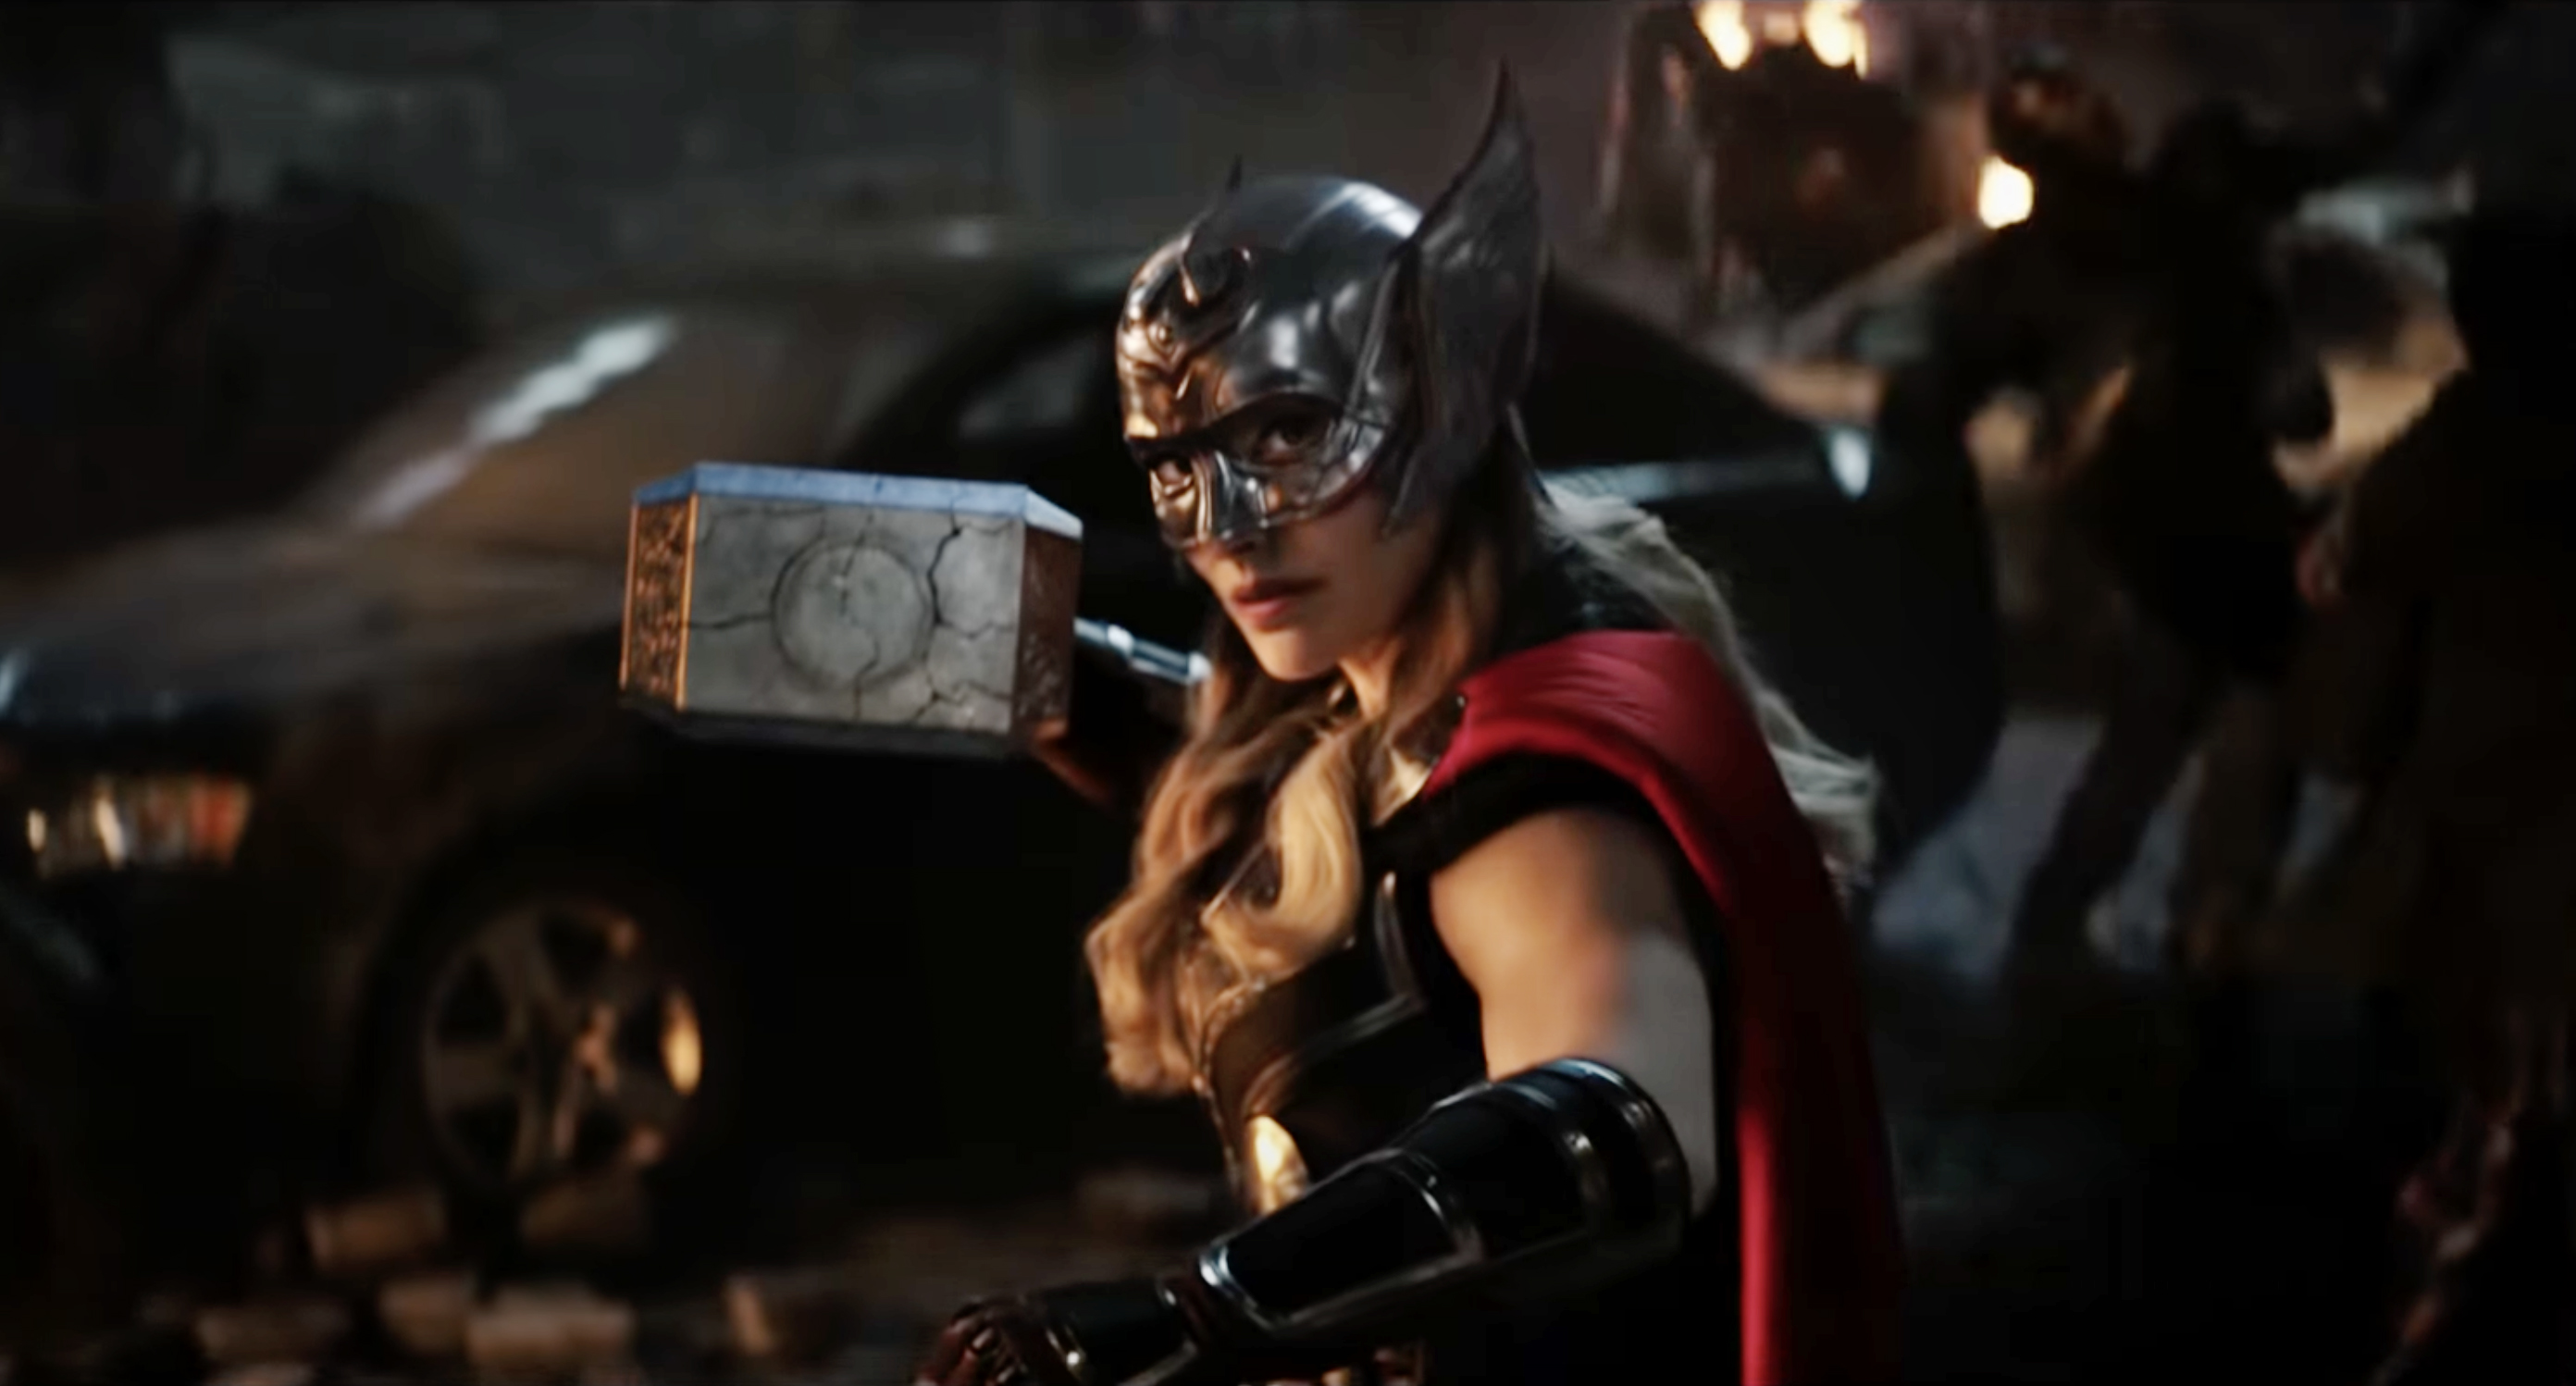 Chris Pratt Fan » Blog Archive » Photos: “Thor: Love and Thunder